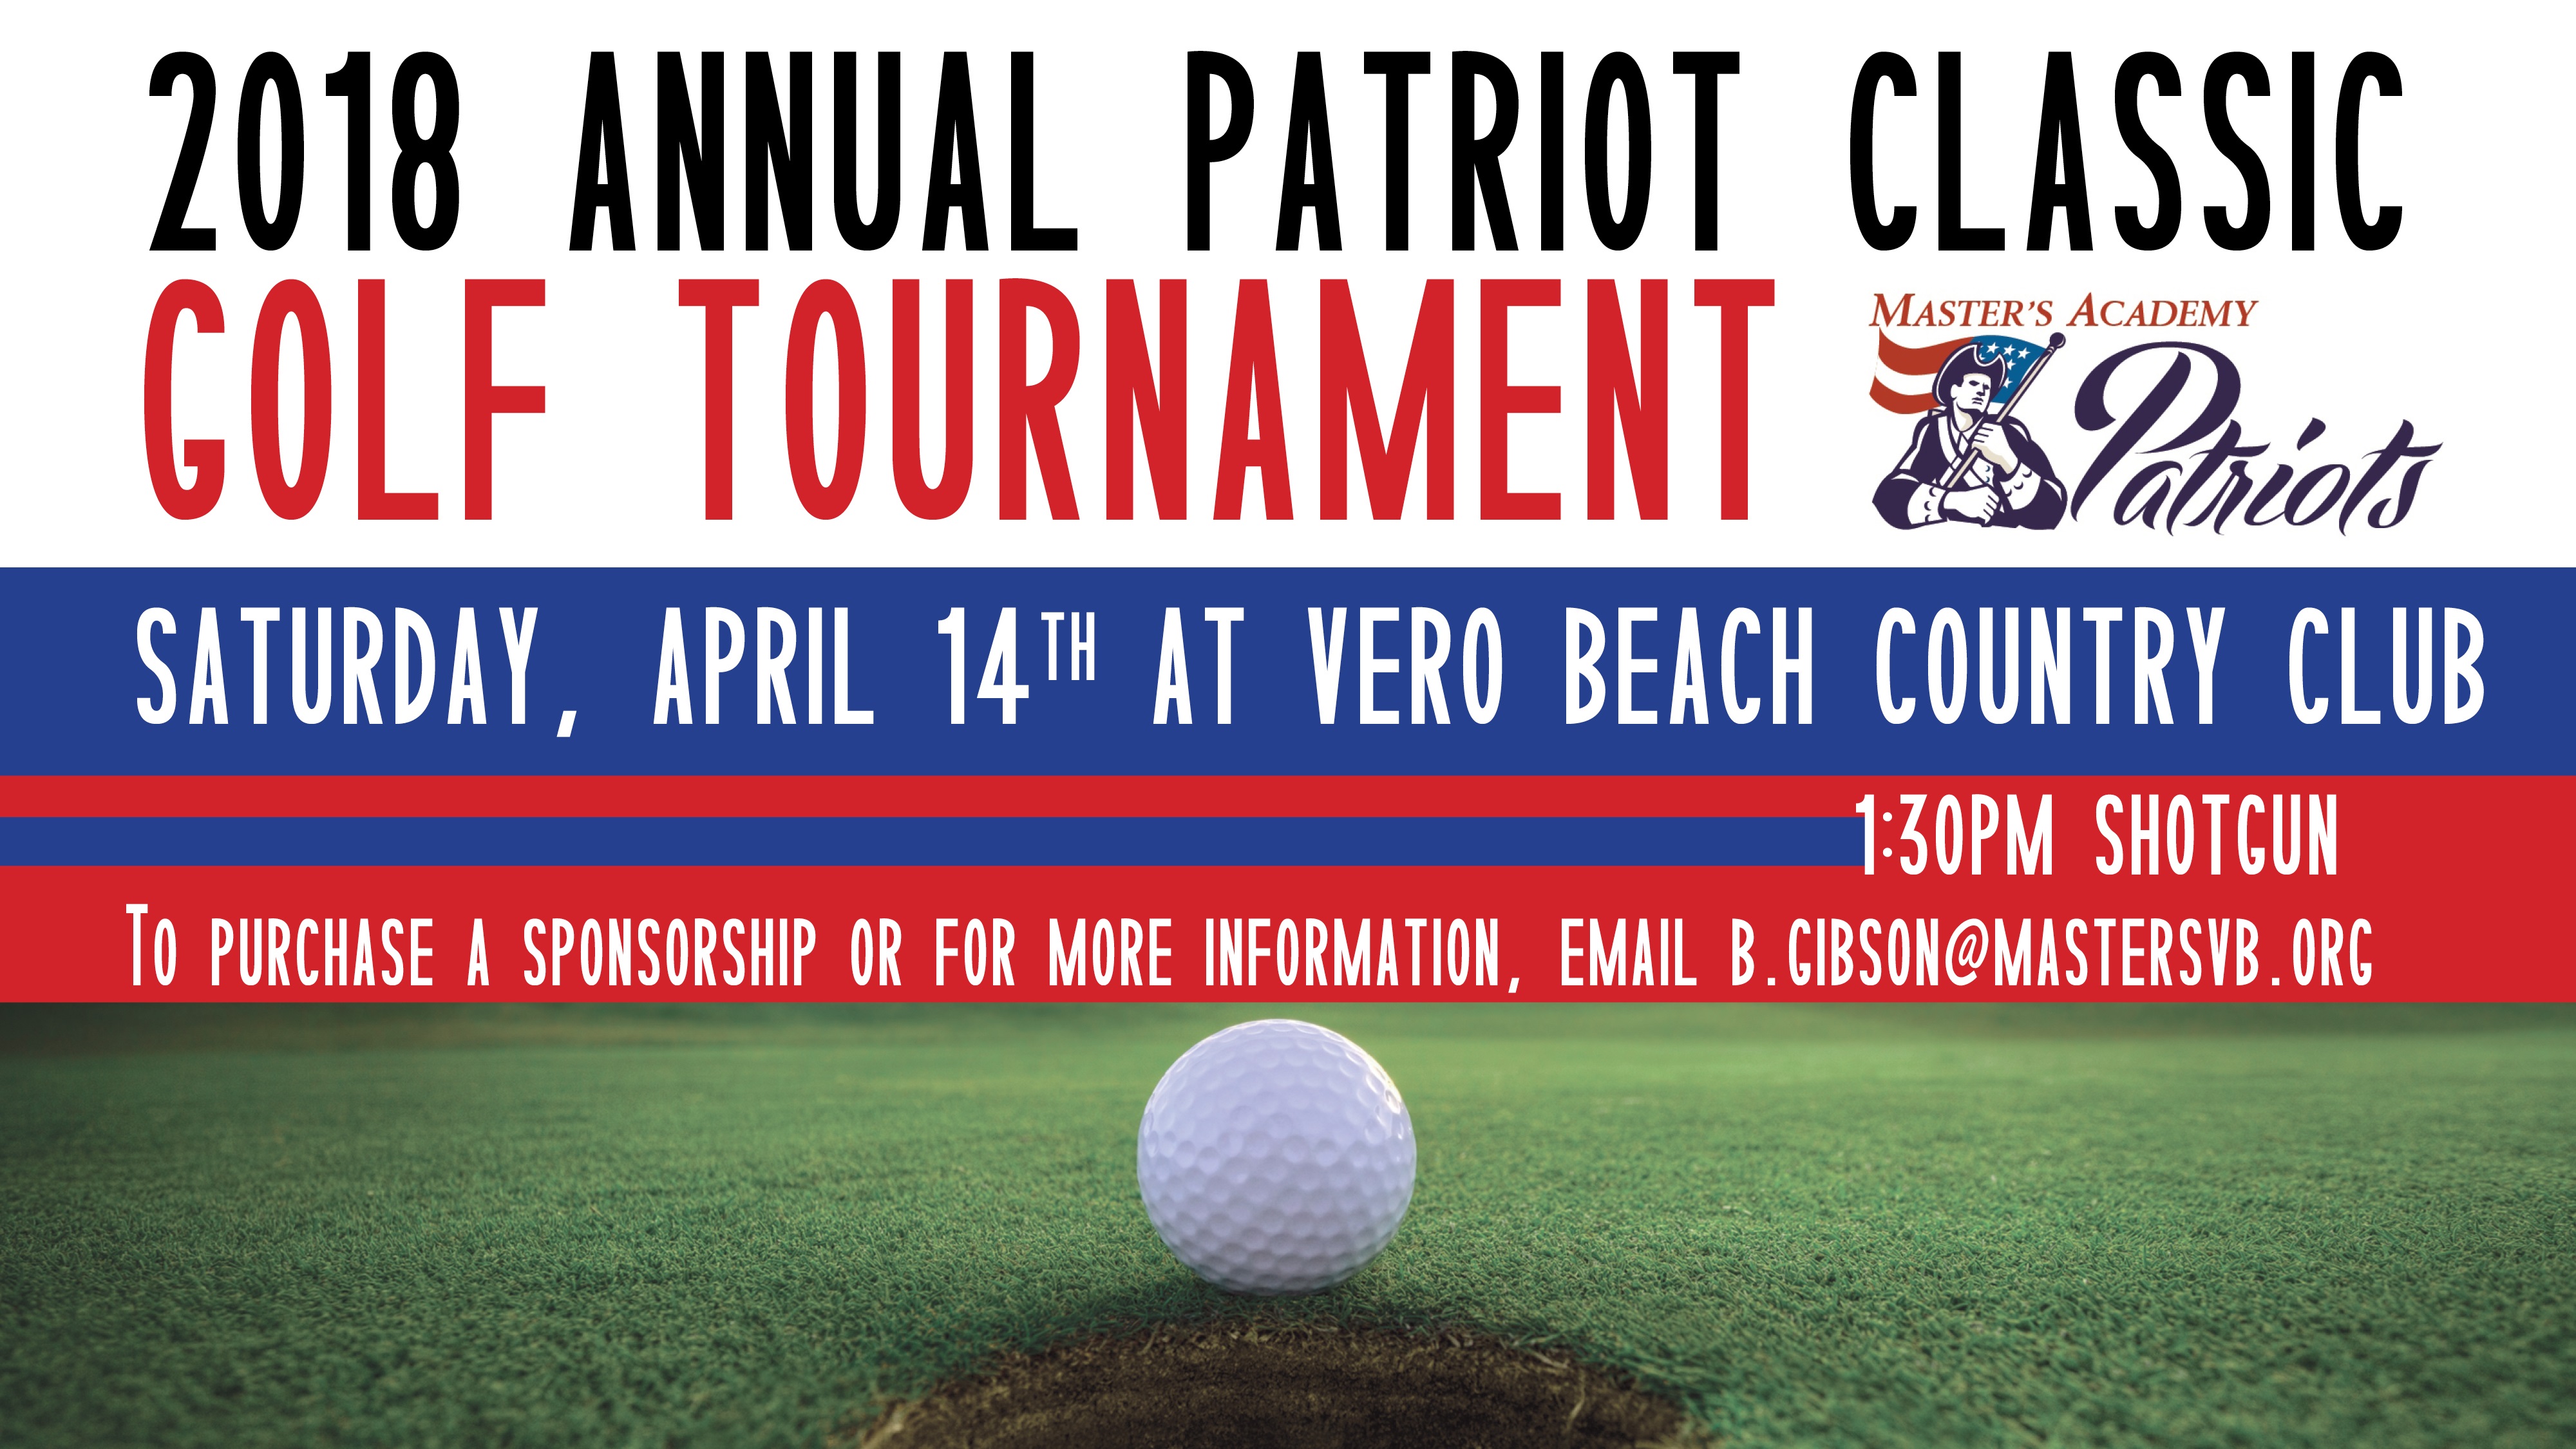 Patriot Classic Golf Tournament